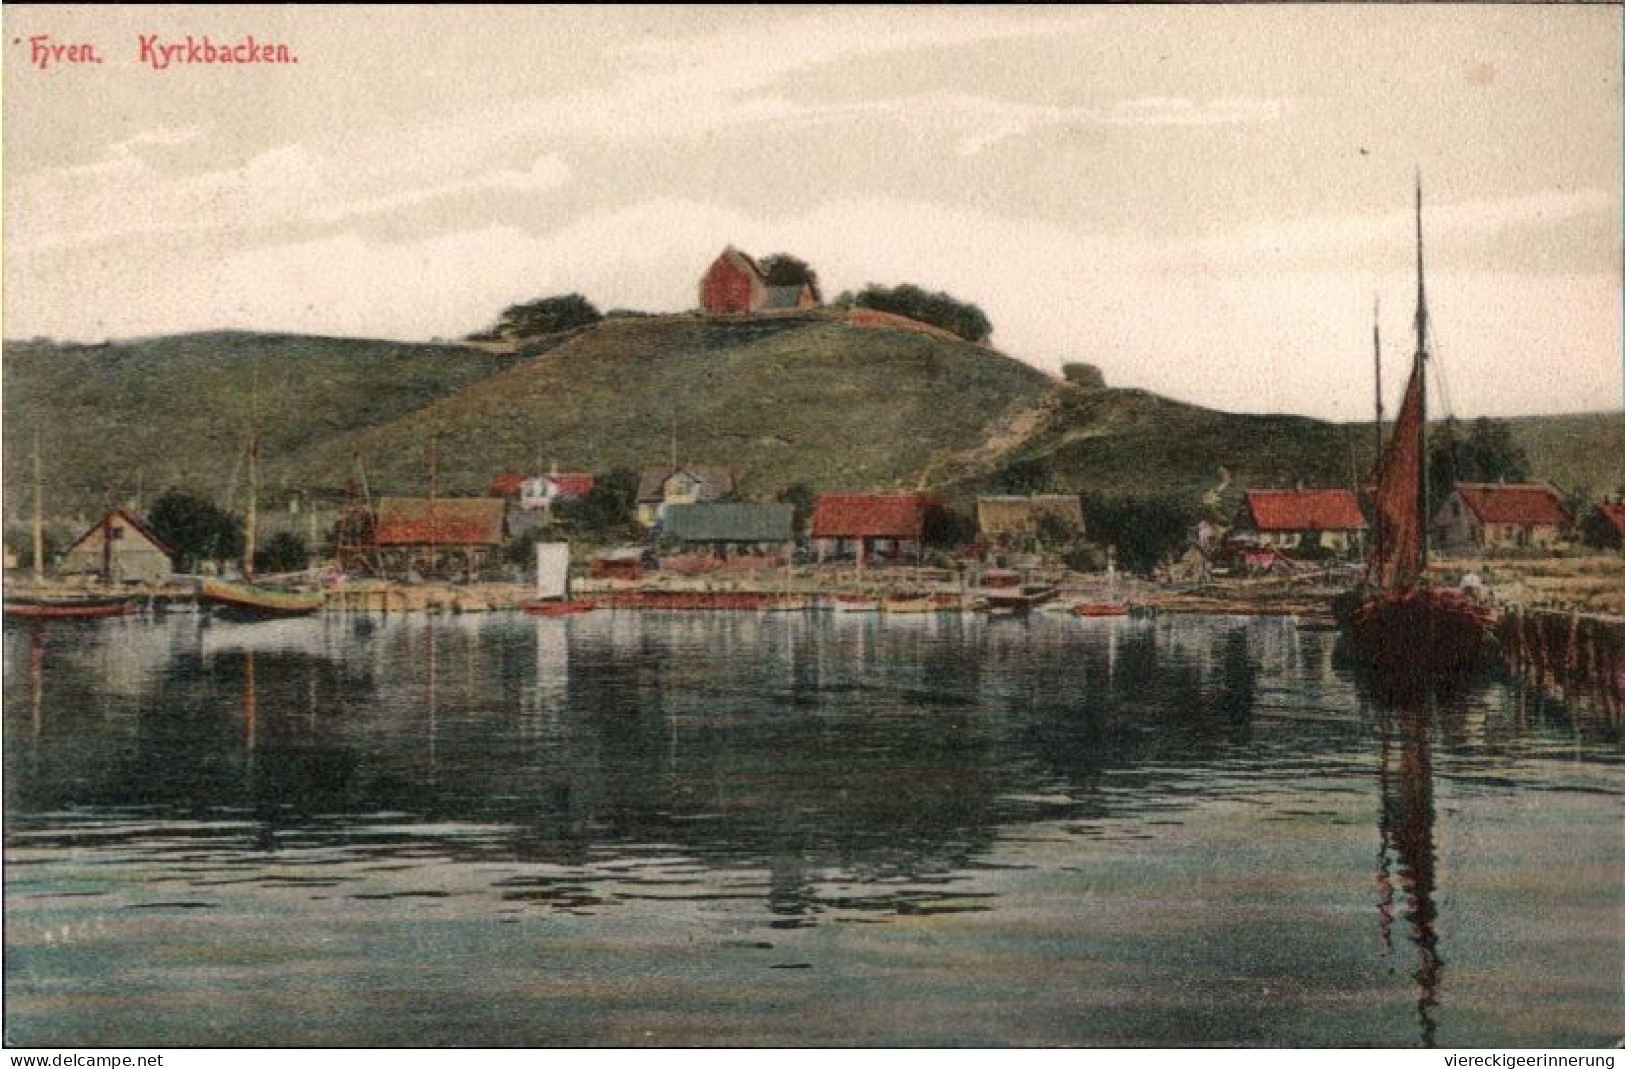 ! Alte Ansichtskarte Insel Hven, Kyrkbacken, Schweden, Sweden - Sweden